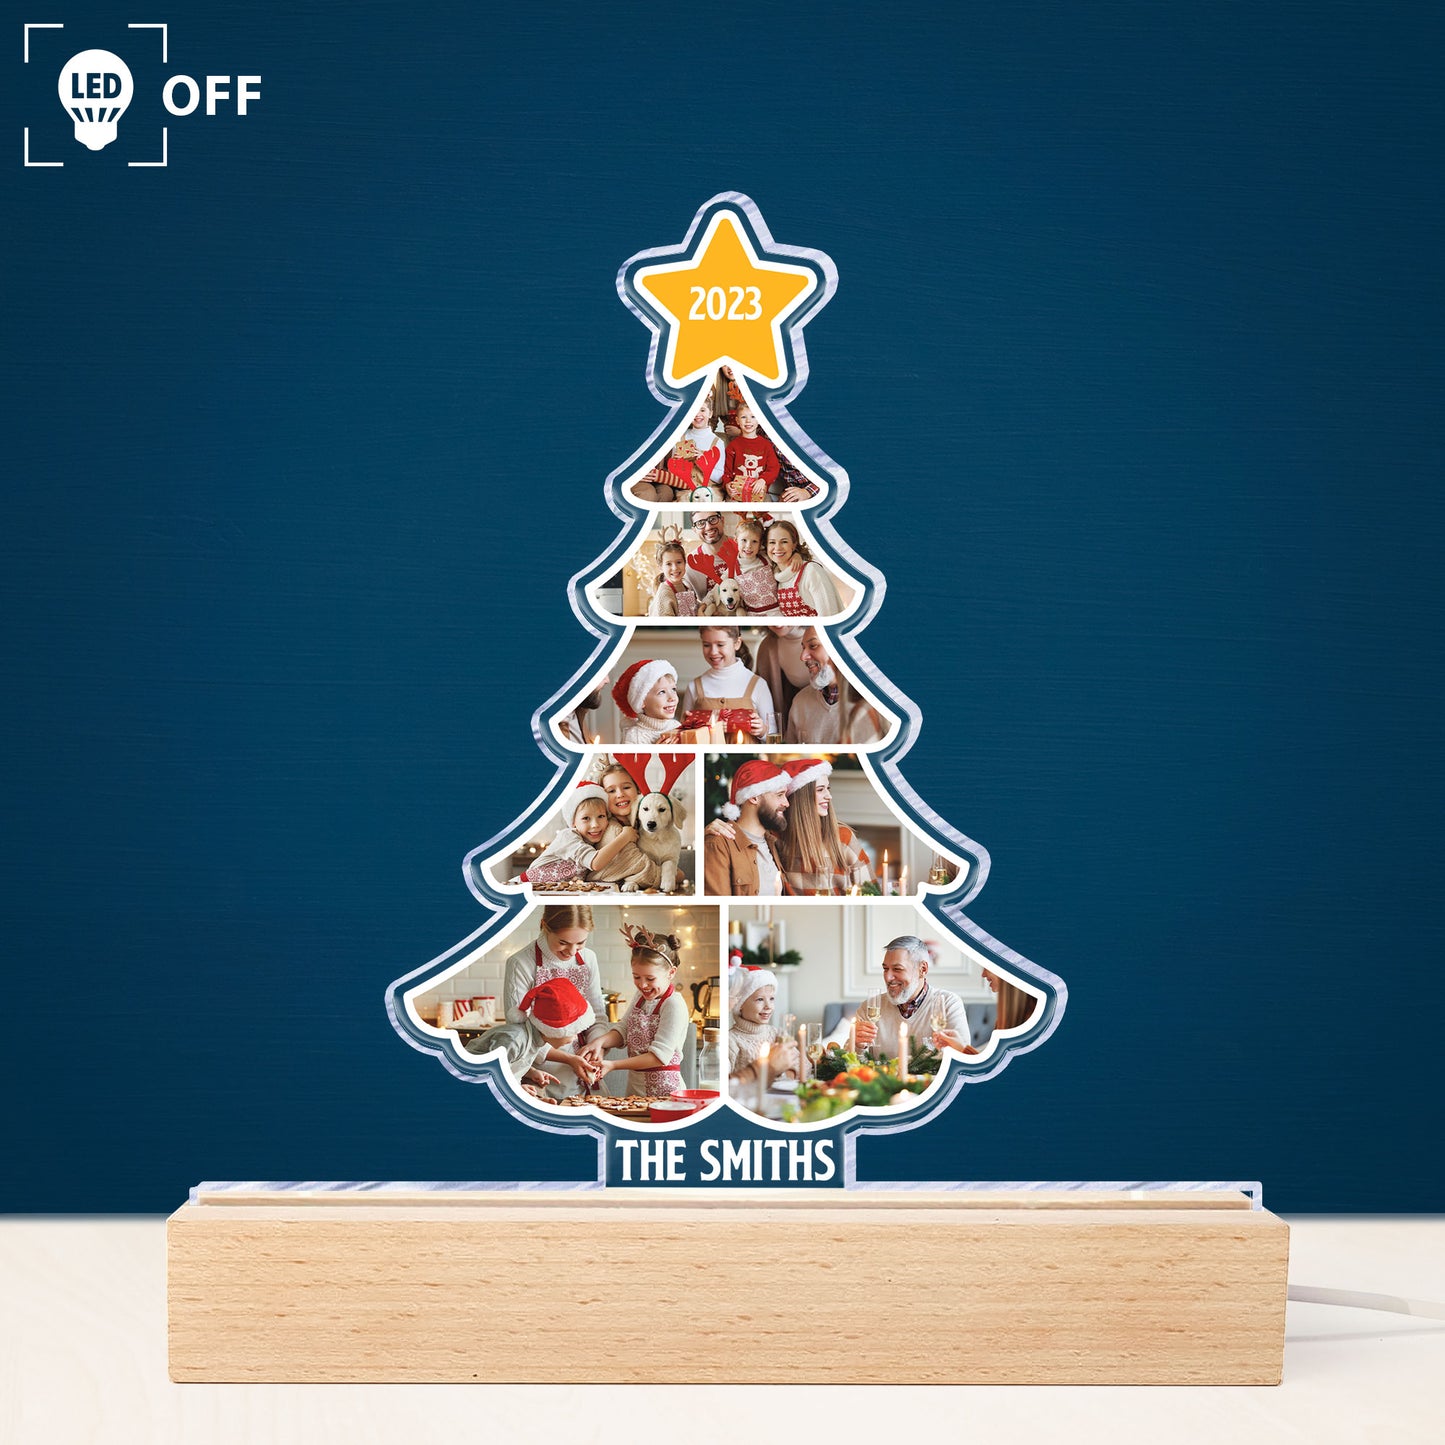 Family Photo Christmas Tree - Personalized Photo LED Light